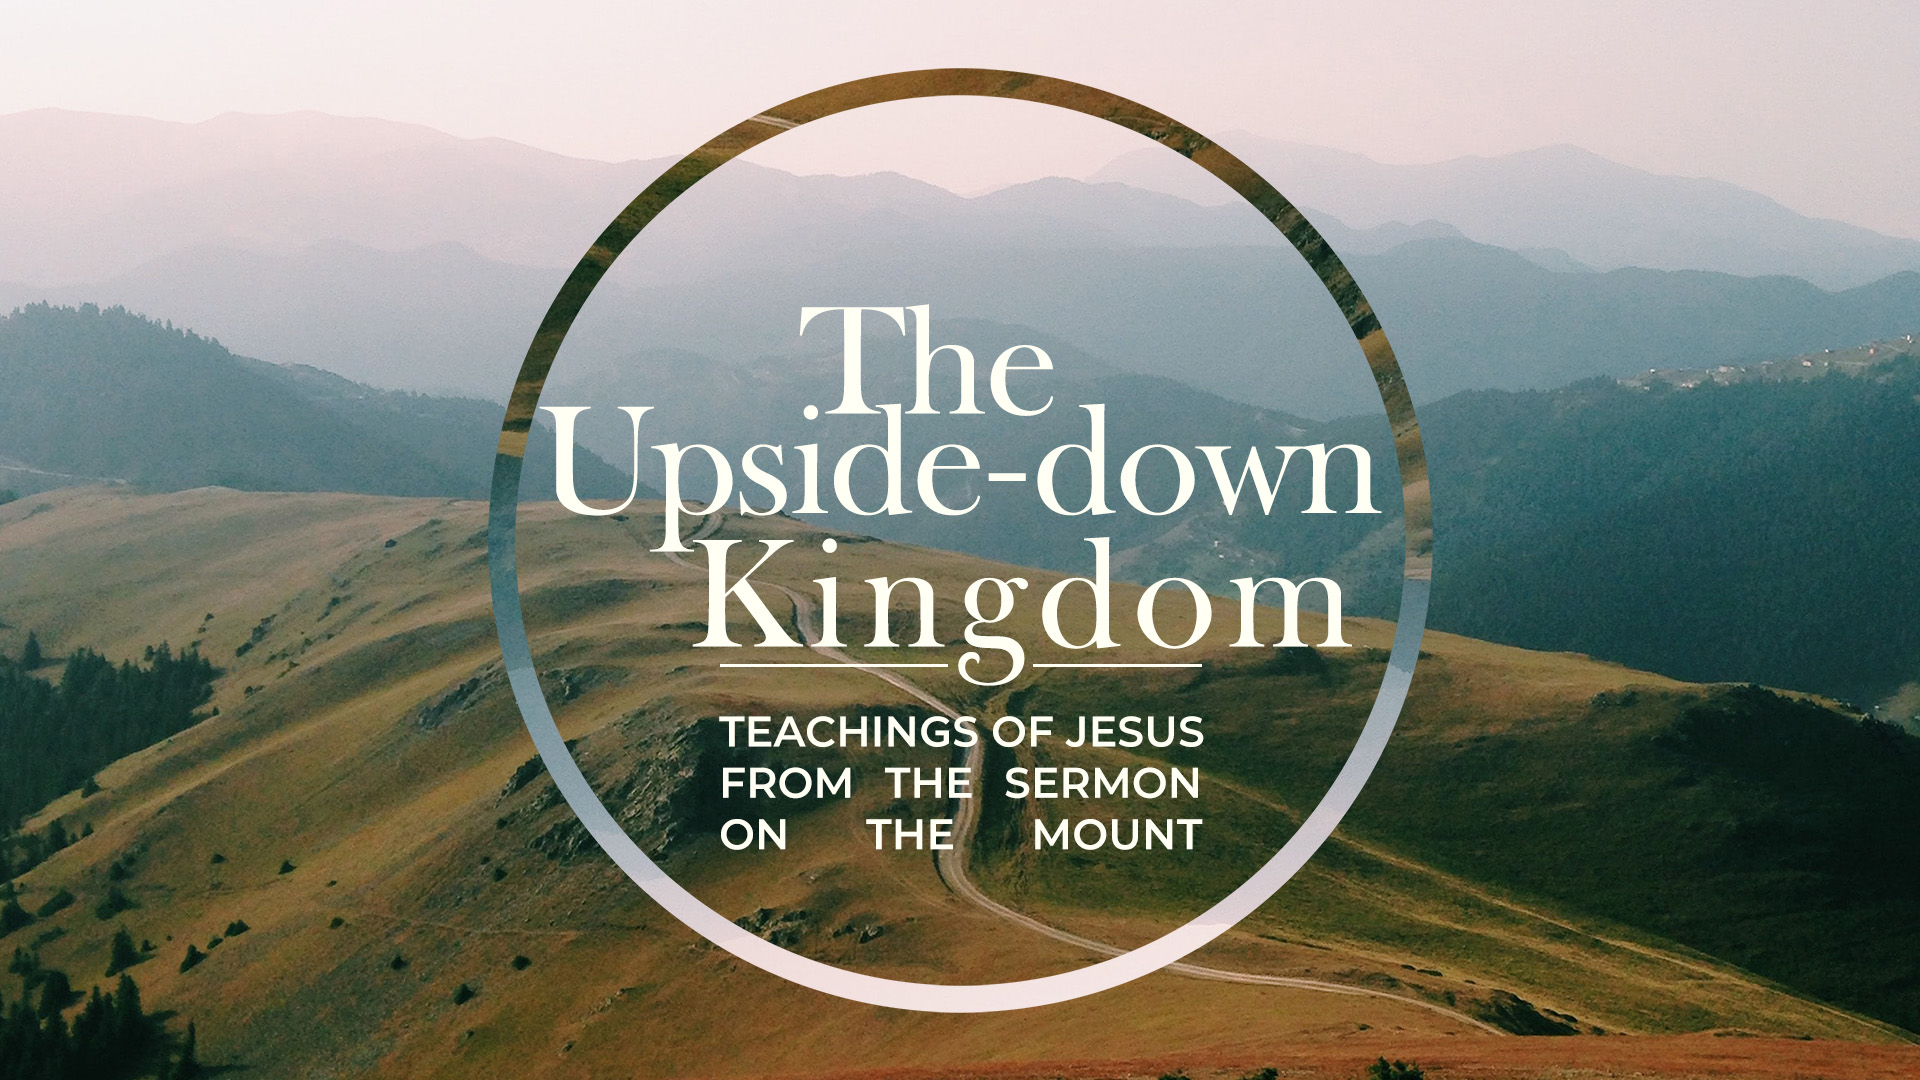 The Upside-down Kingdom